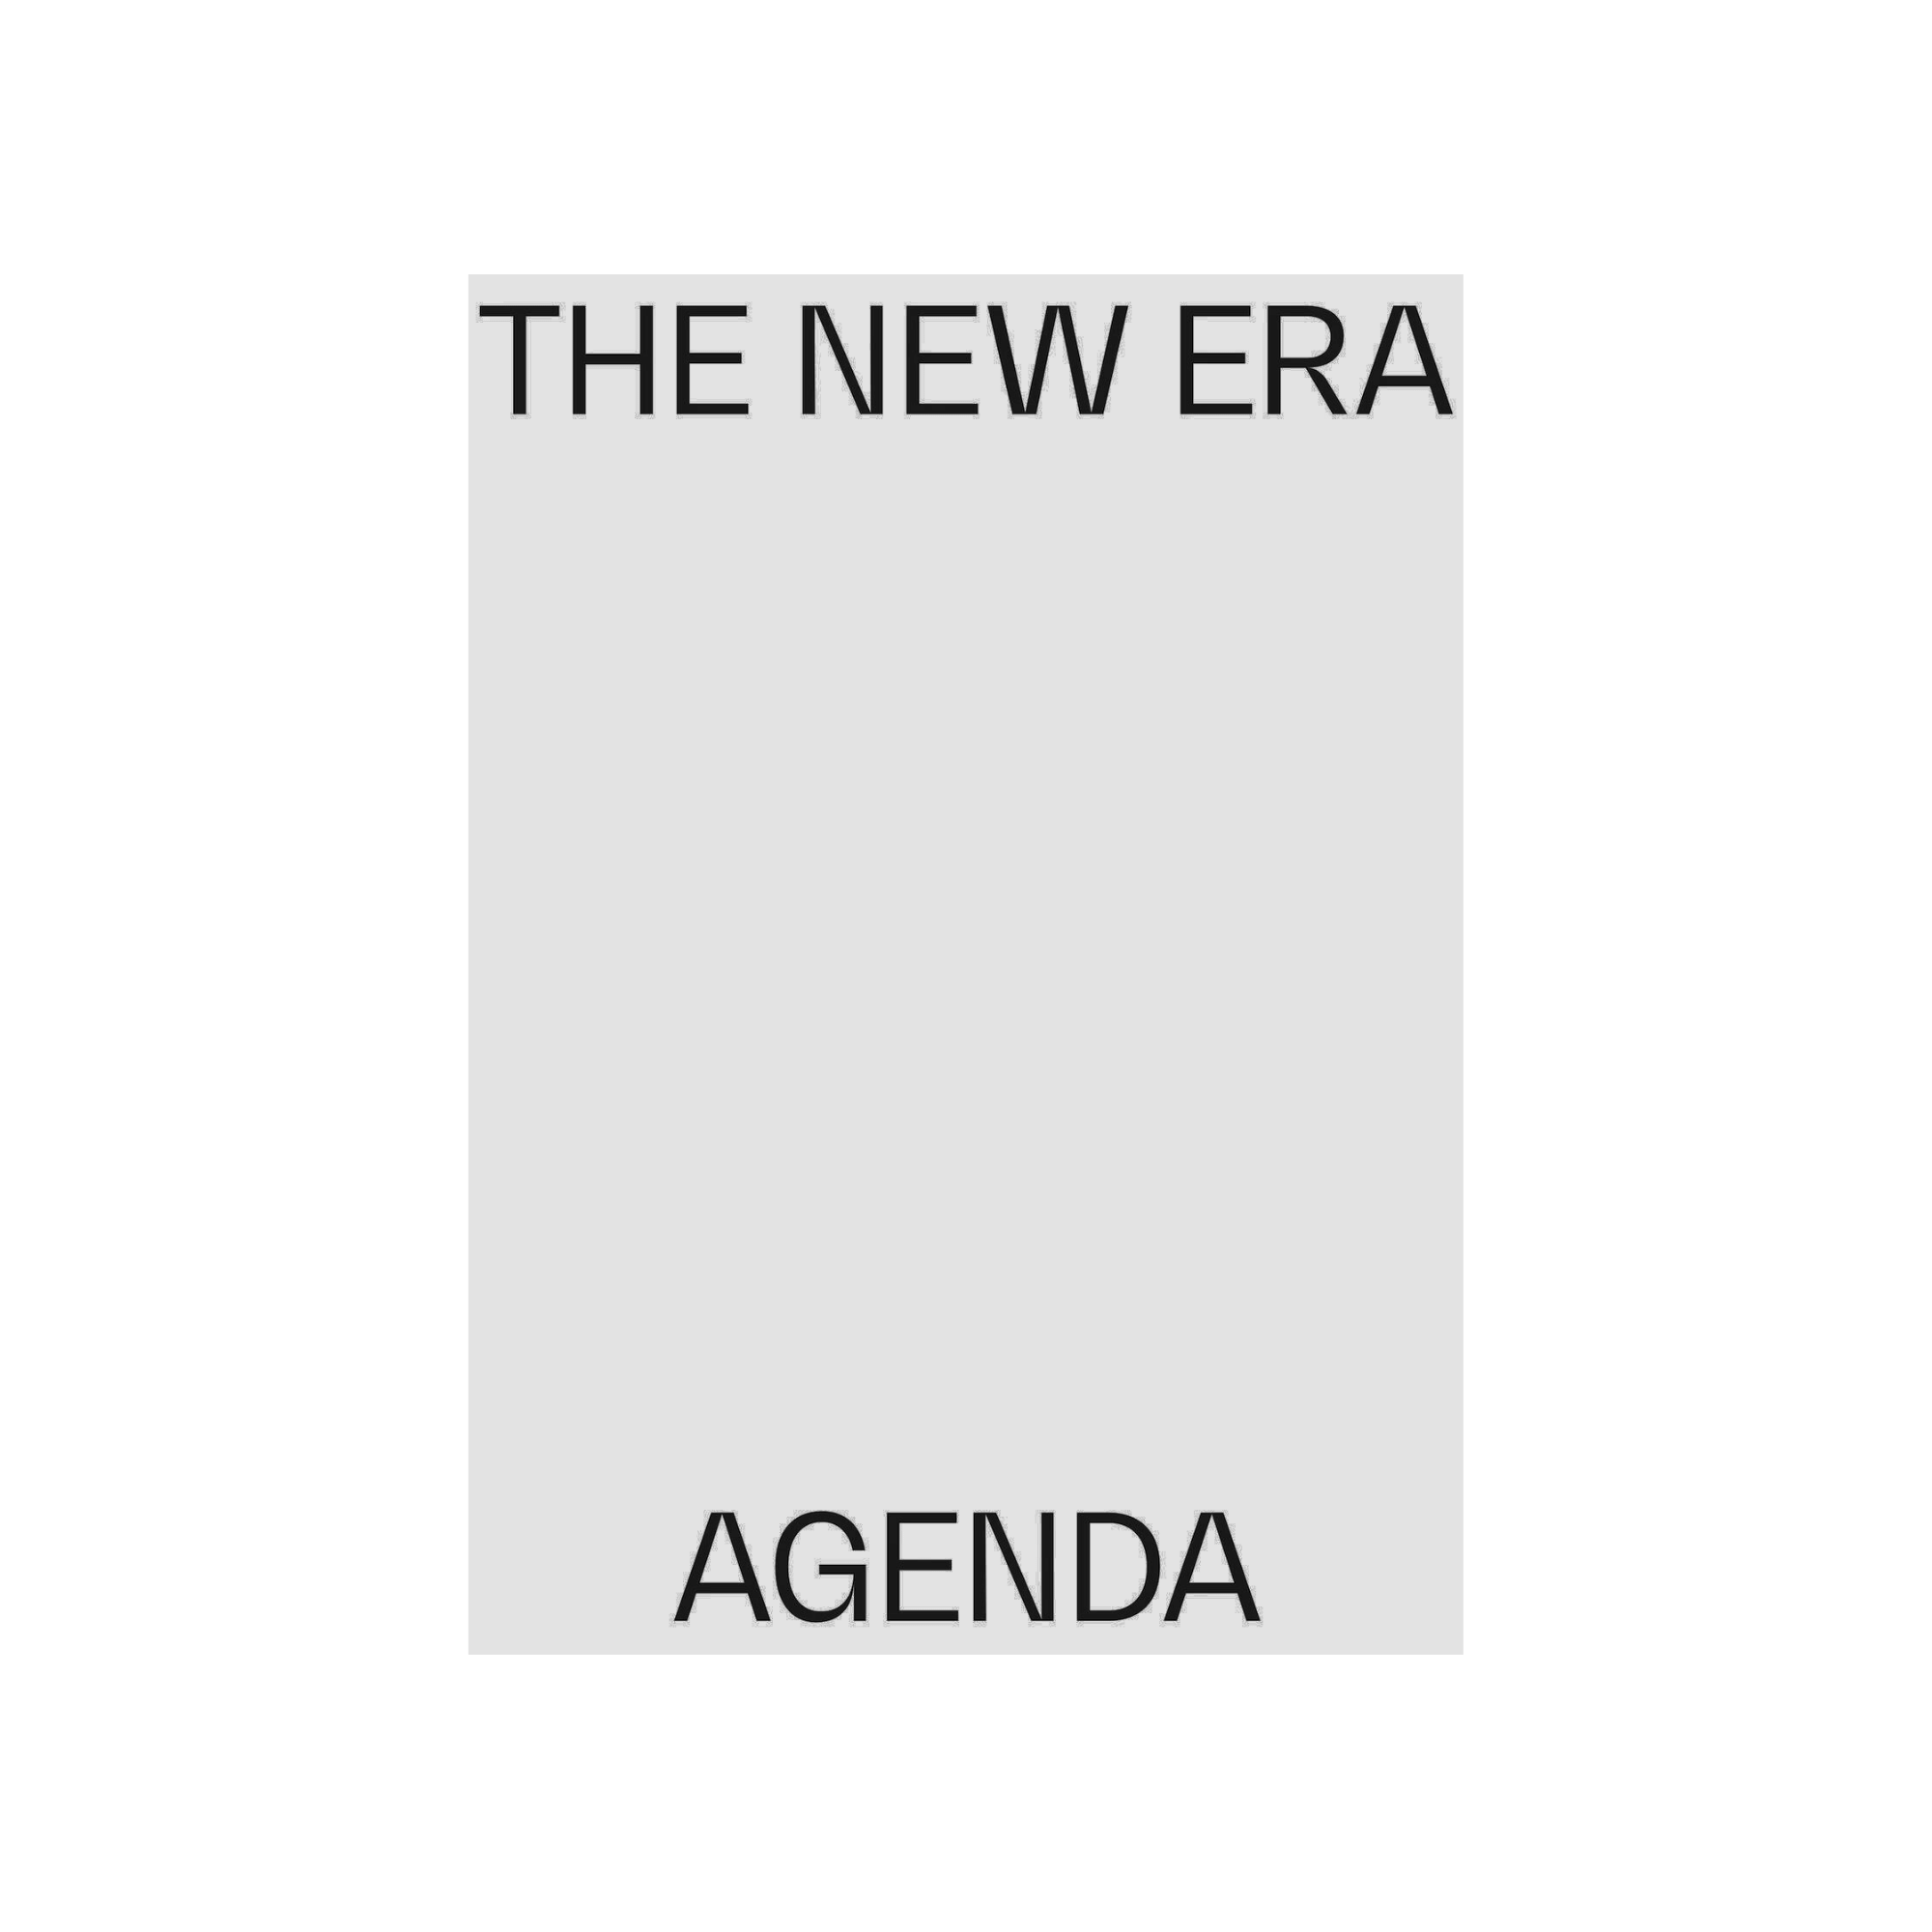 The New Era Agenda